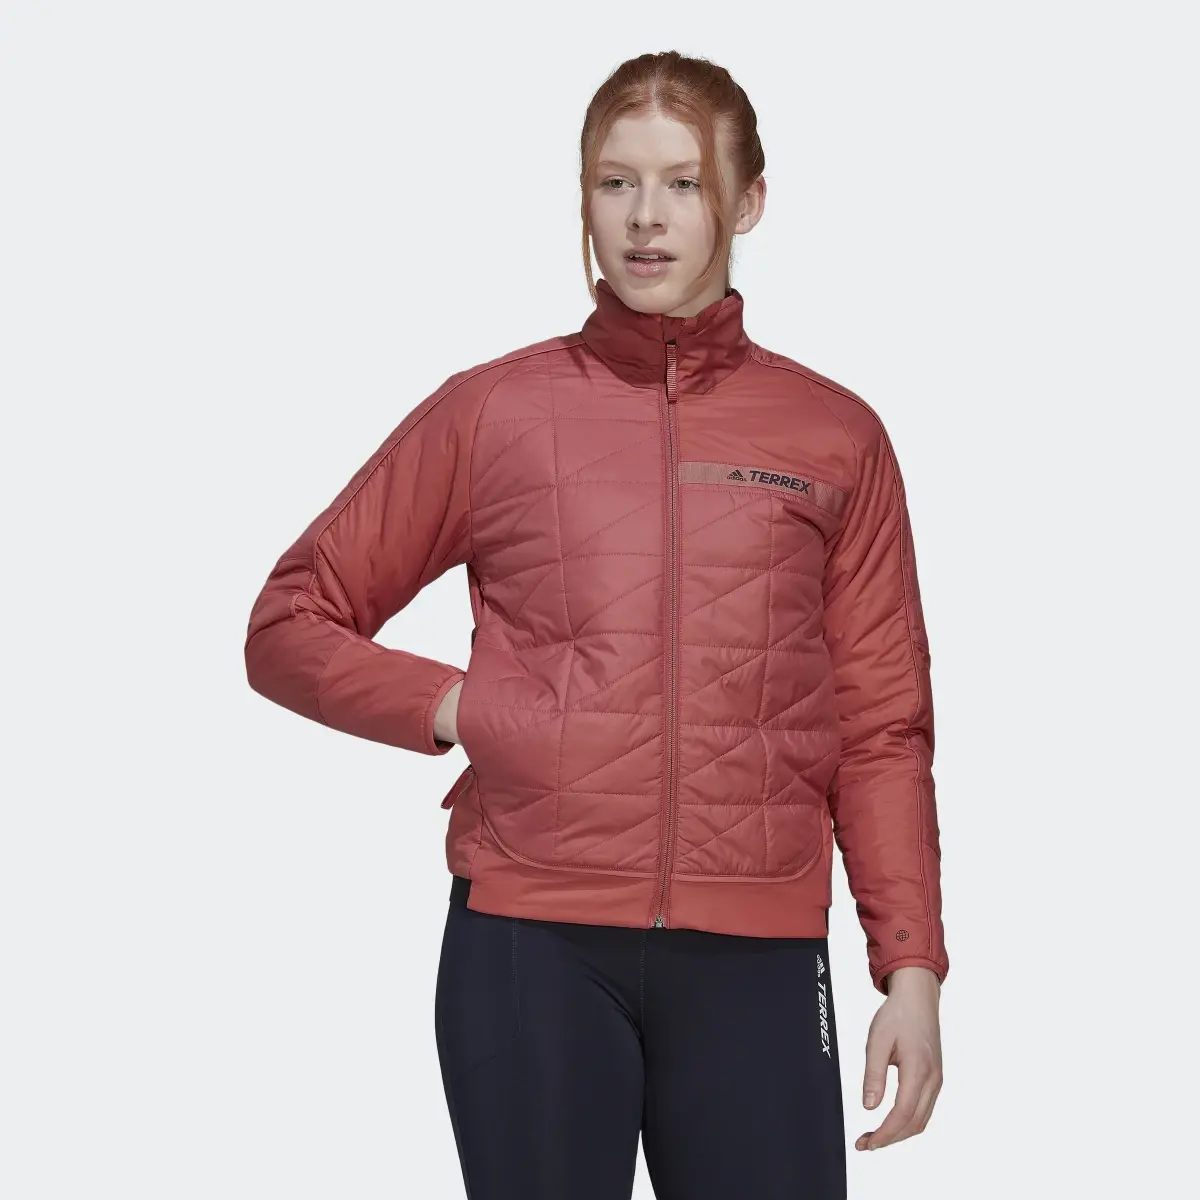 Adidas TERREX Multi Synthetic Insulated Jacket. 2